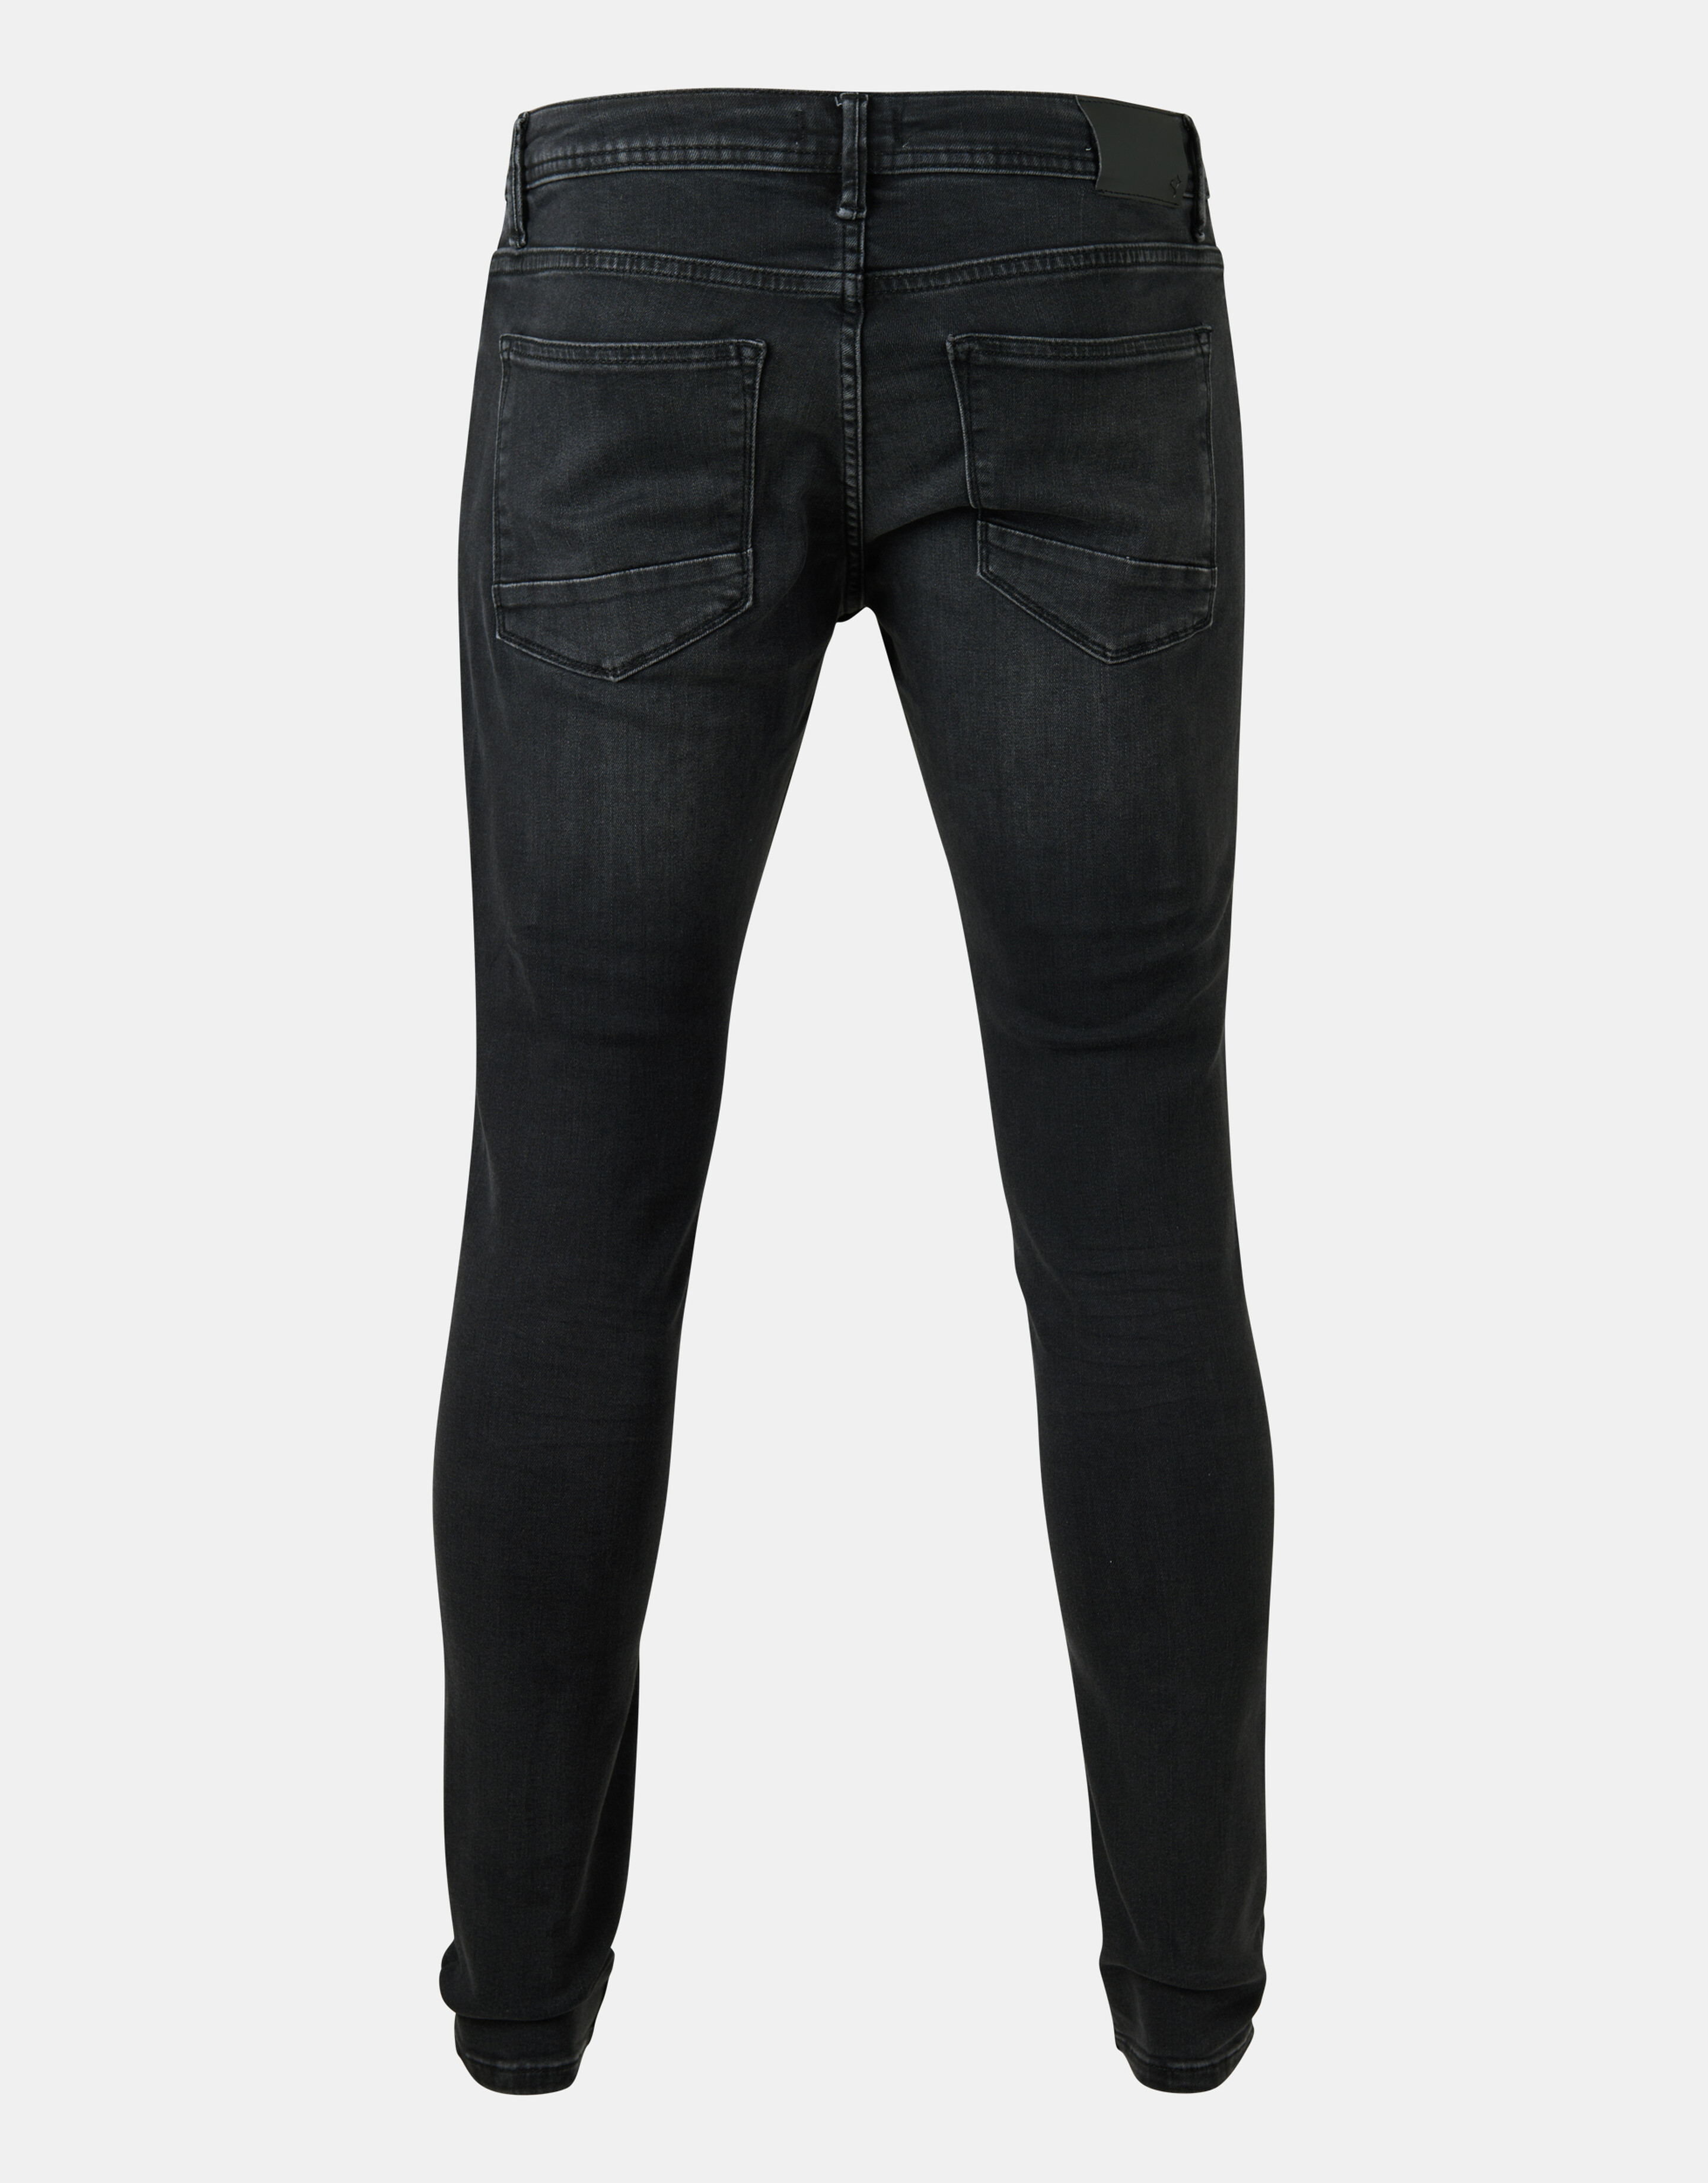 Skinny Jeans Schwarz Länge 32 Refill